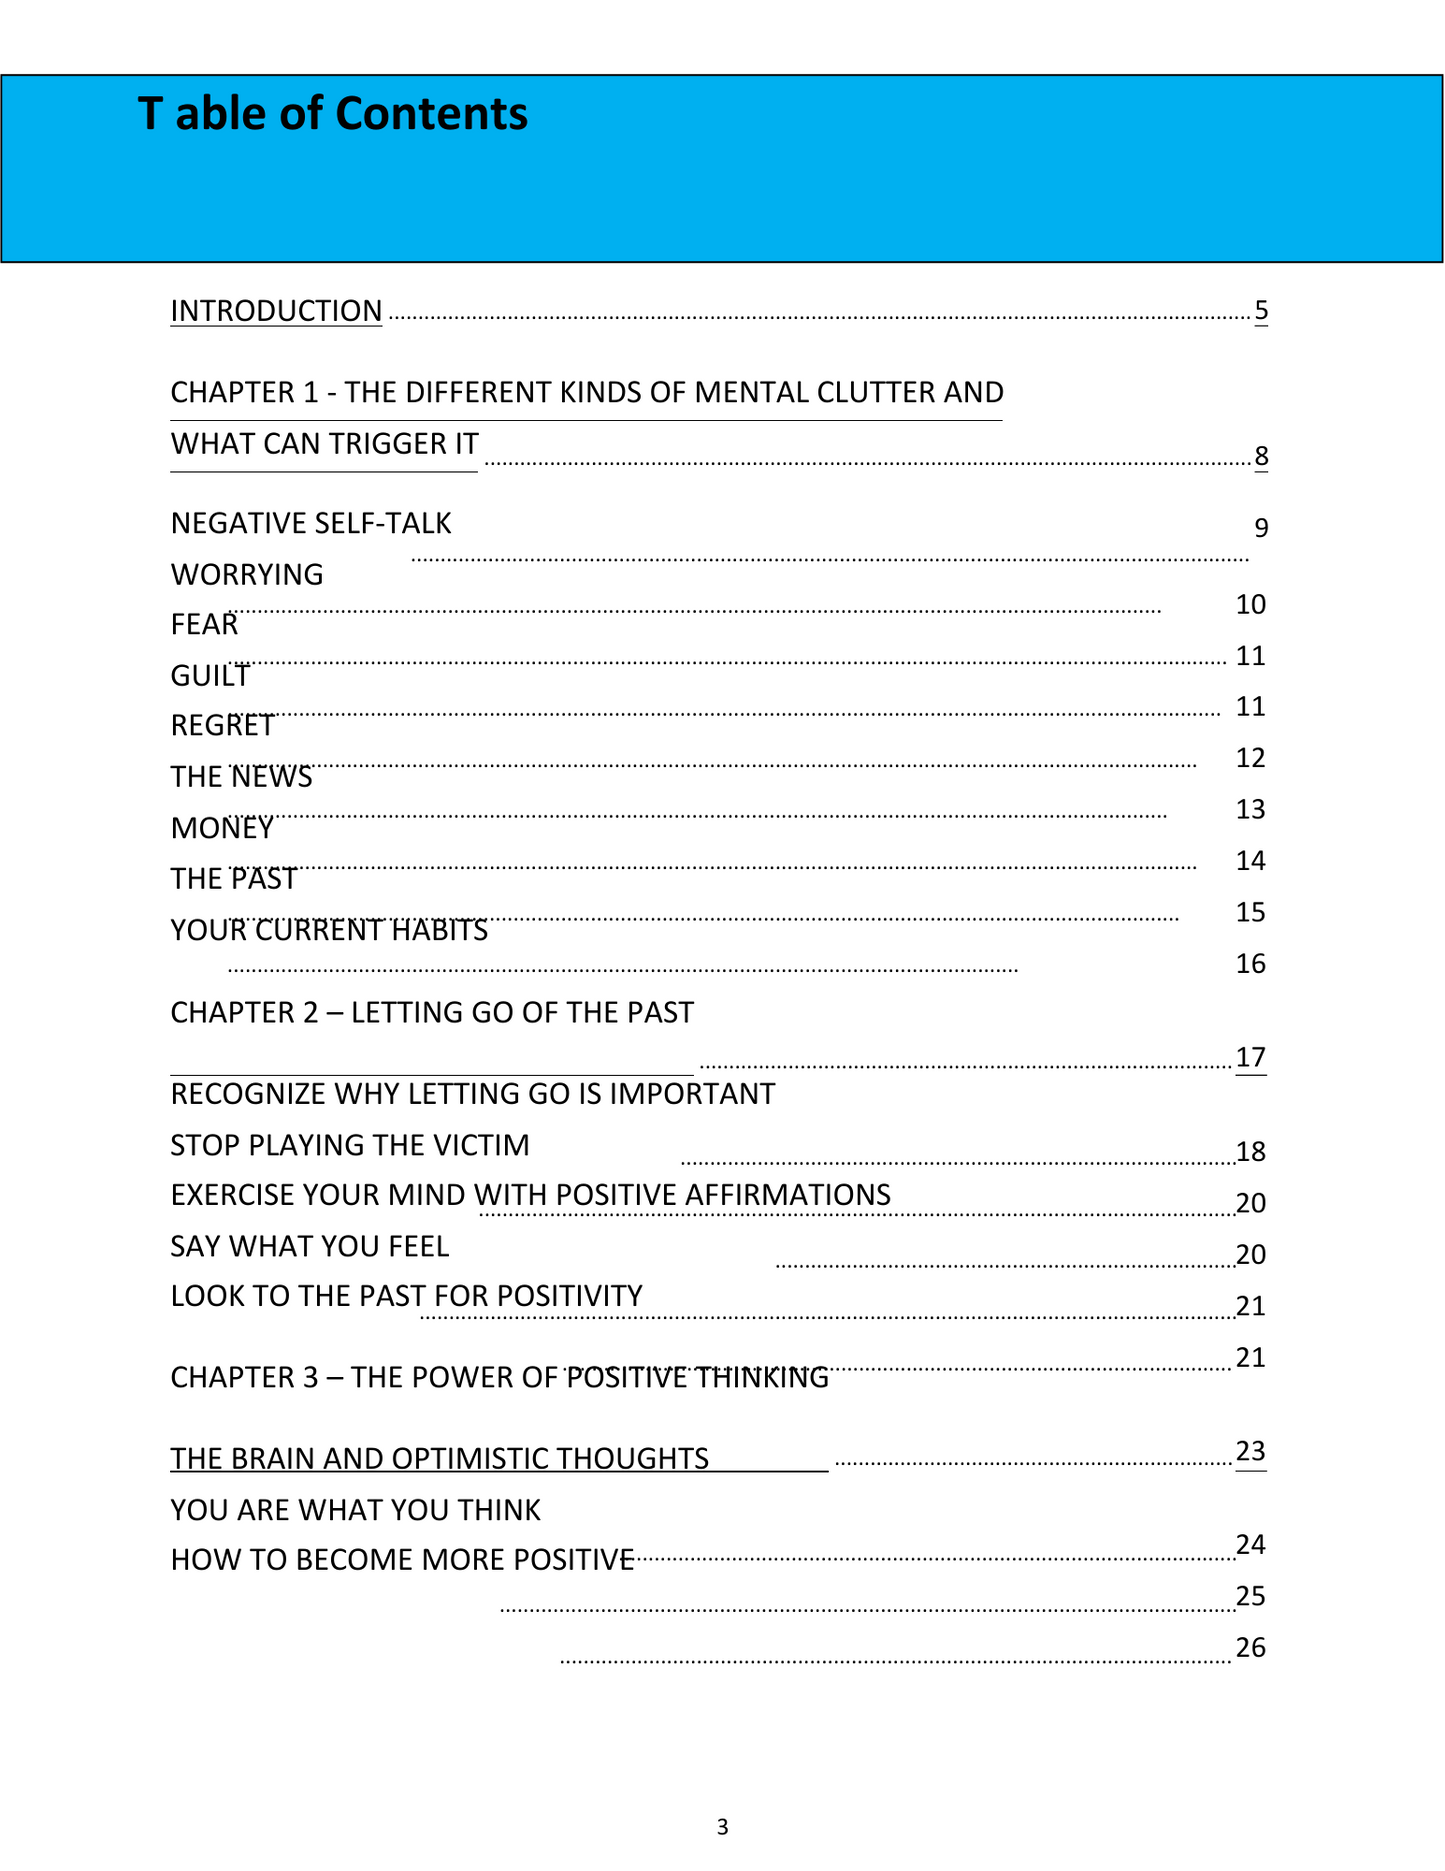 Clear Mental Vision PDF Ebook Different Kinds of Mental Clutter - Download Delight